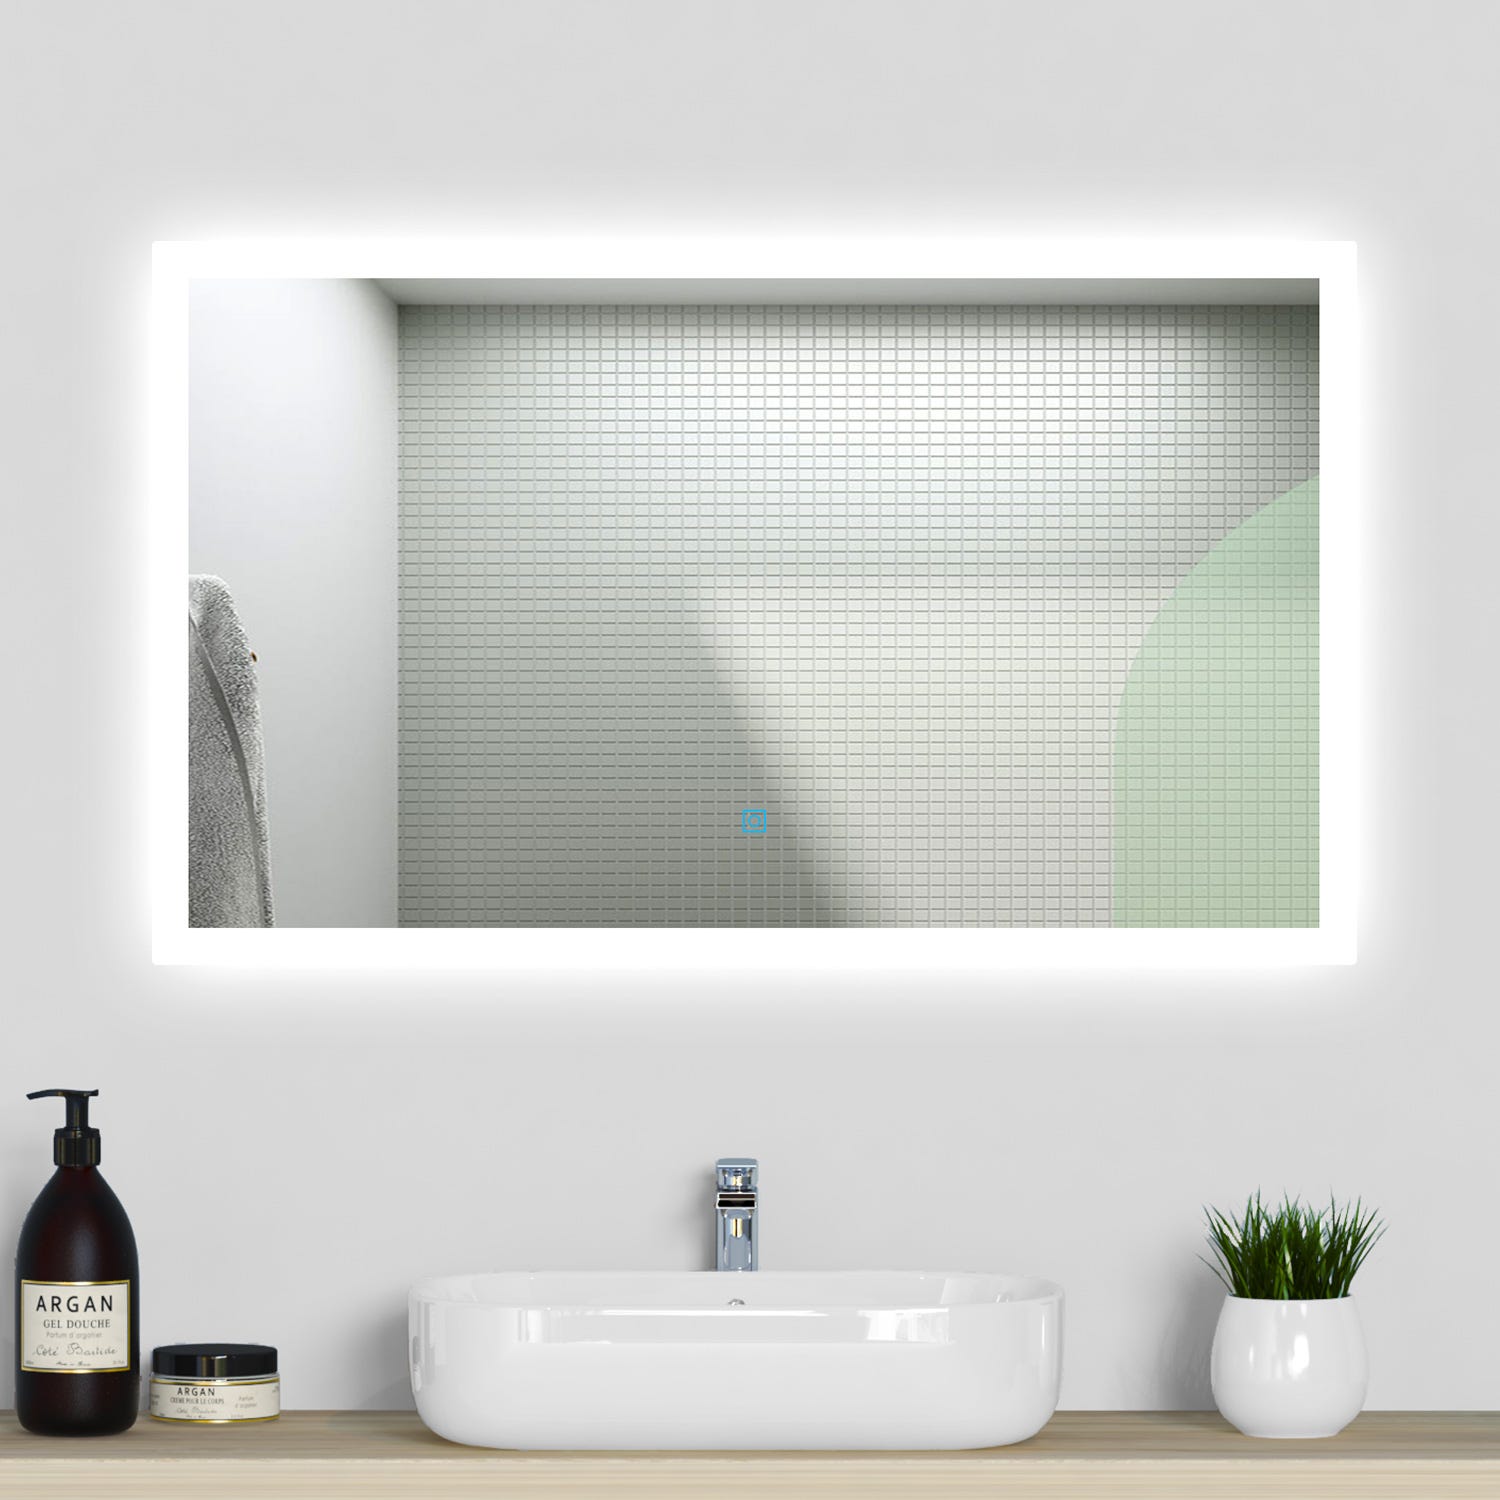 Espejo baño rectangular con led 120 x 70 cm, 2 botón tátil, antivaho